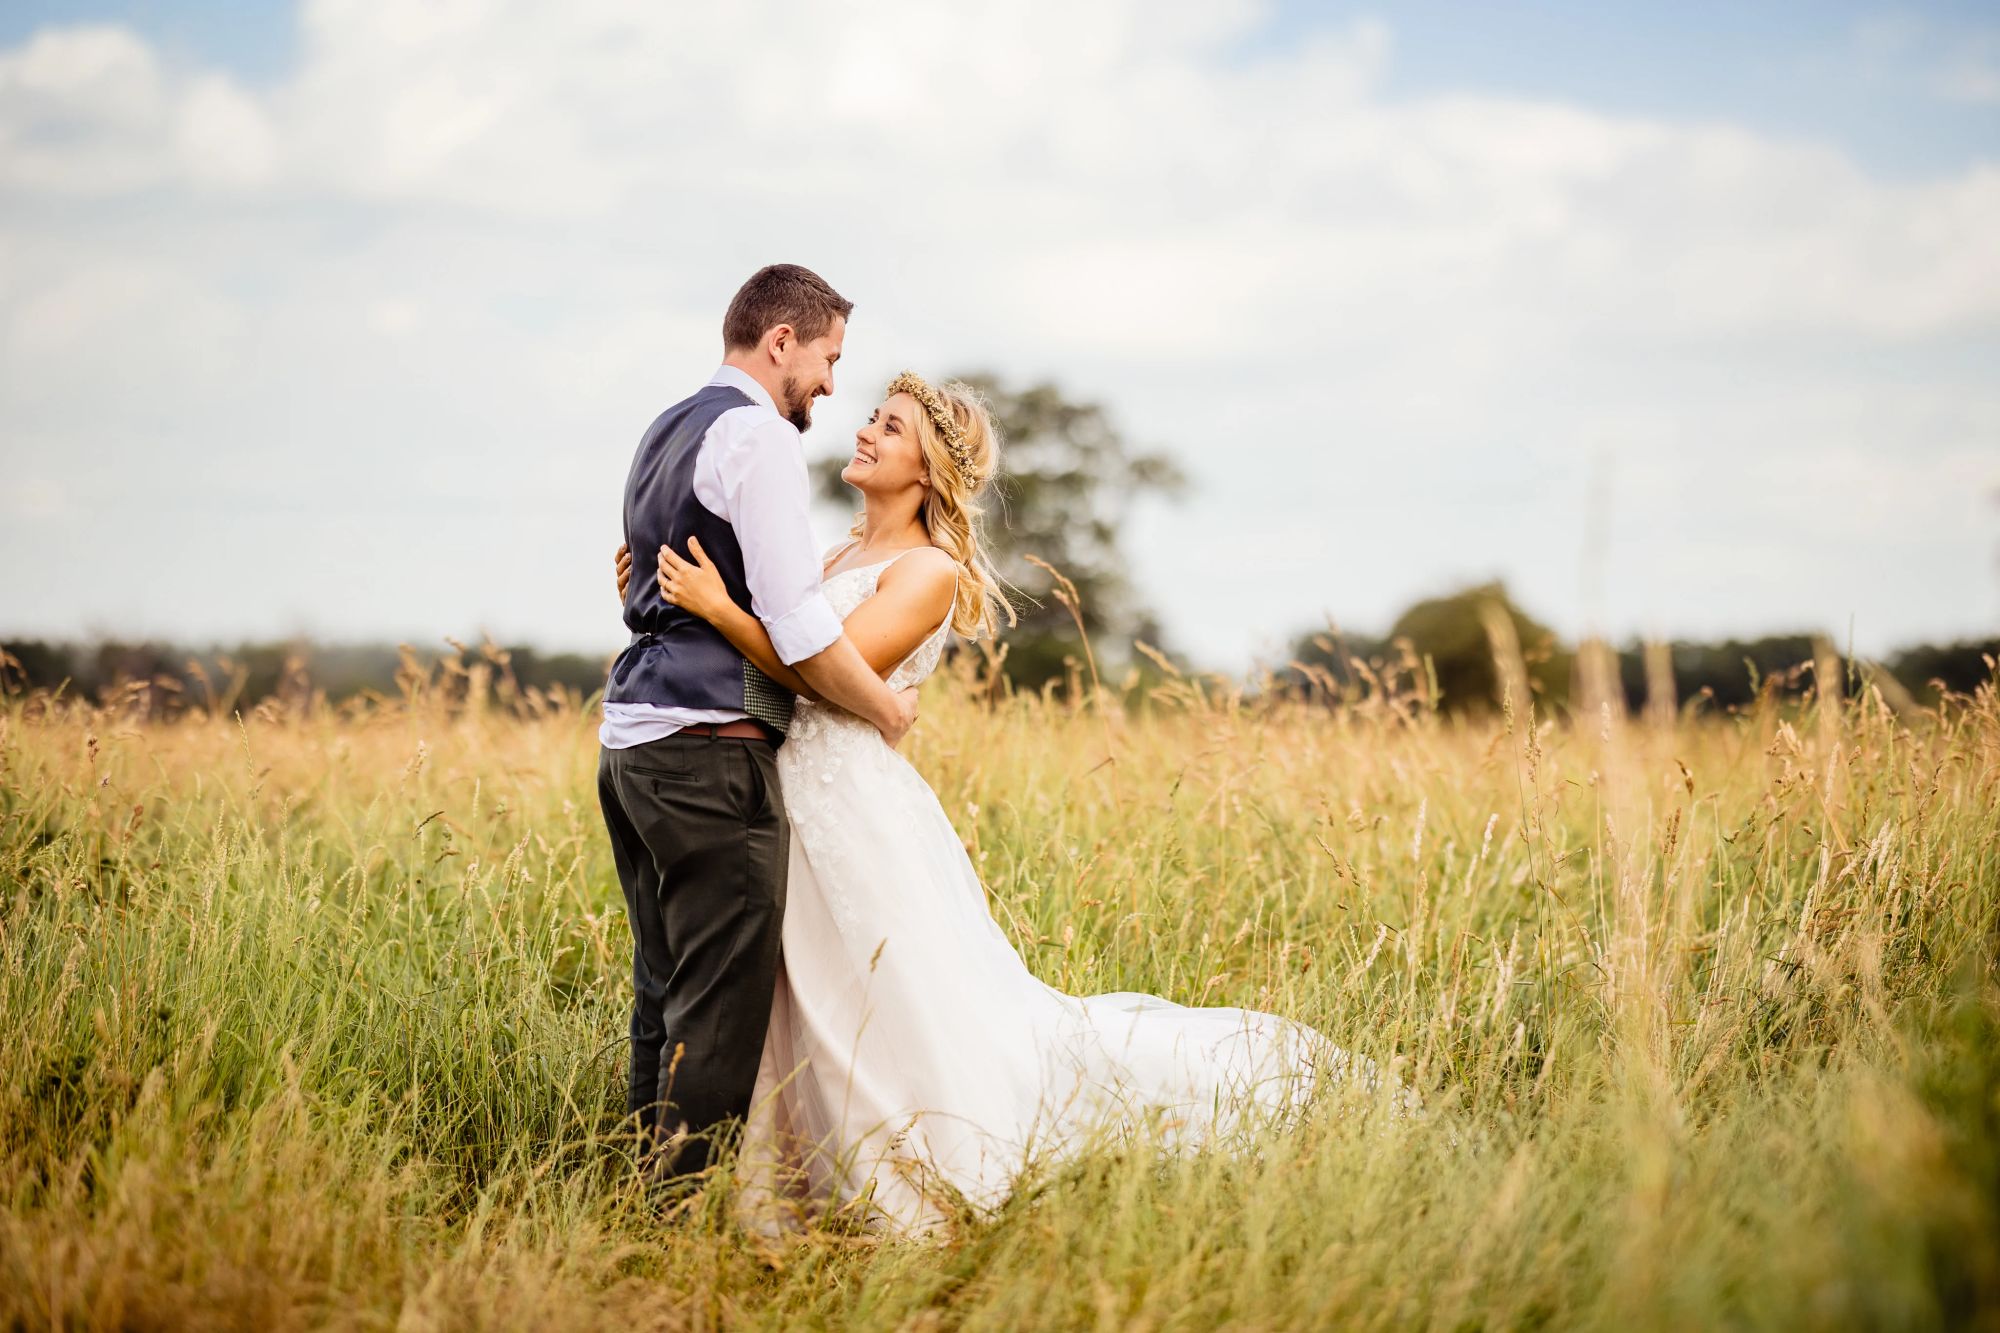 Bride wearing a flower crown embraces her groom in a field of long grass